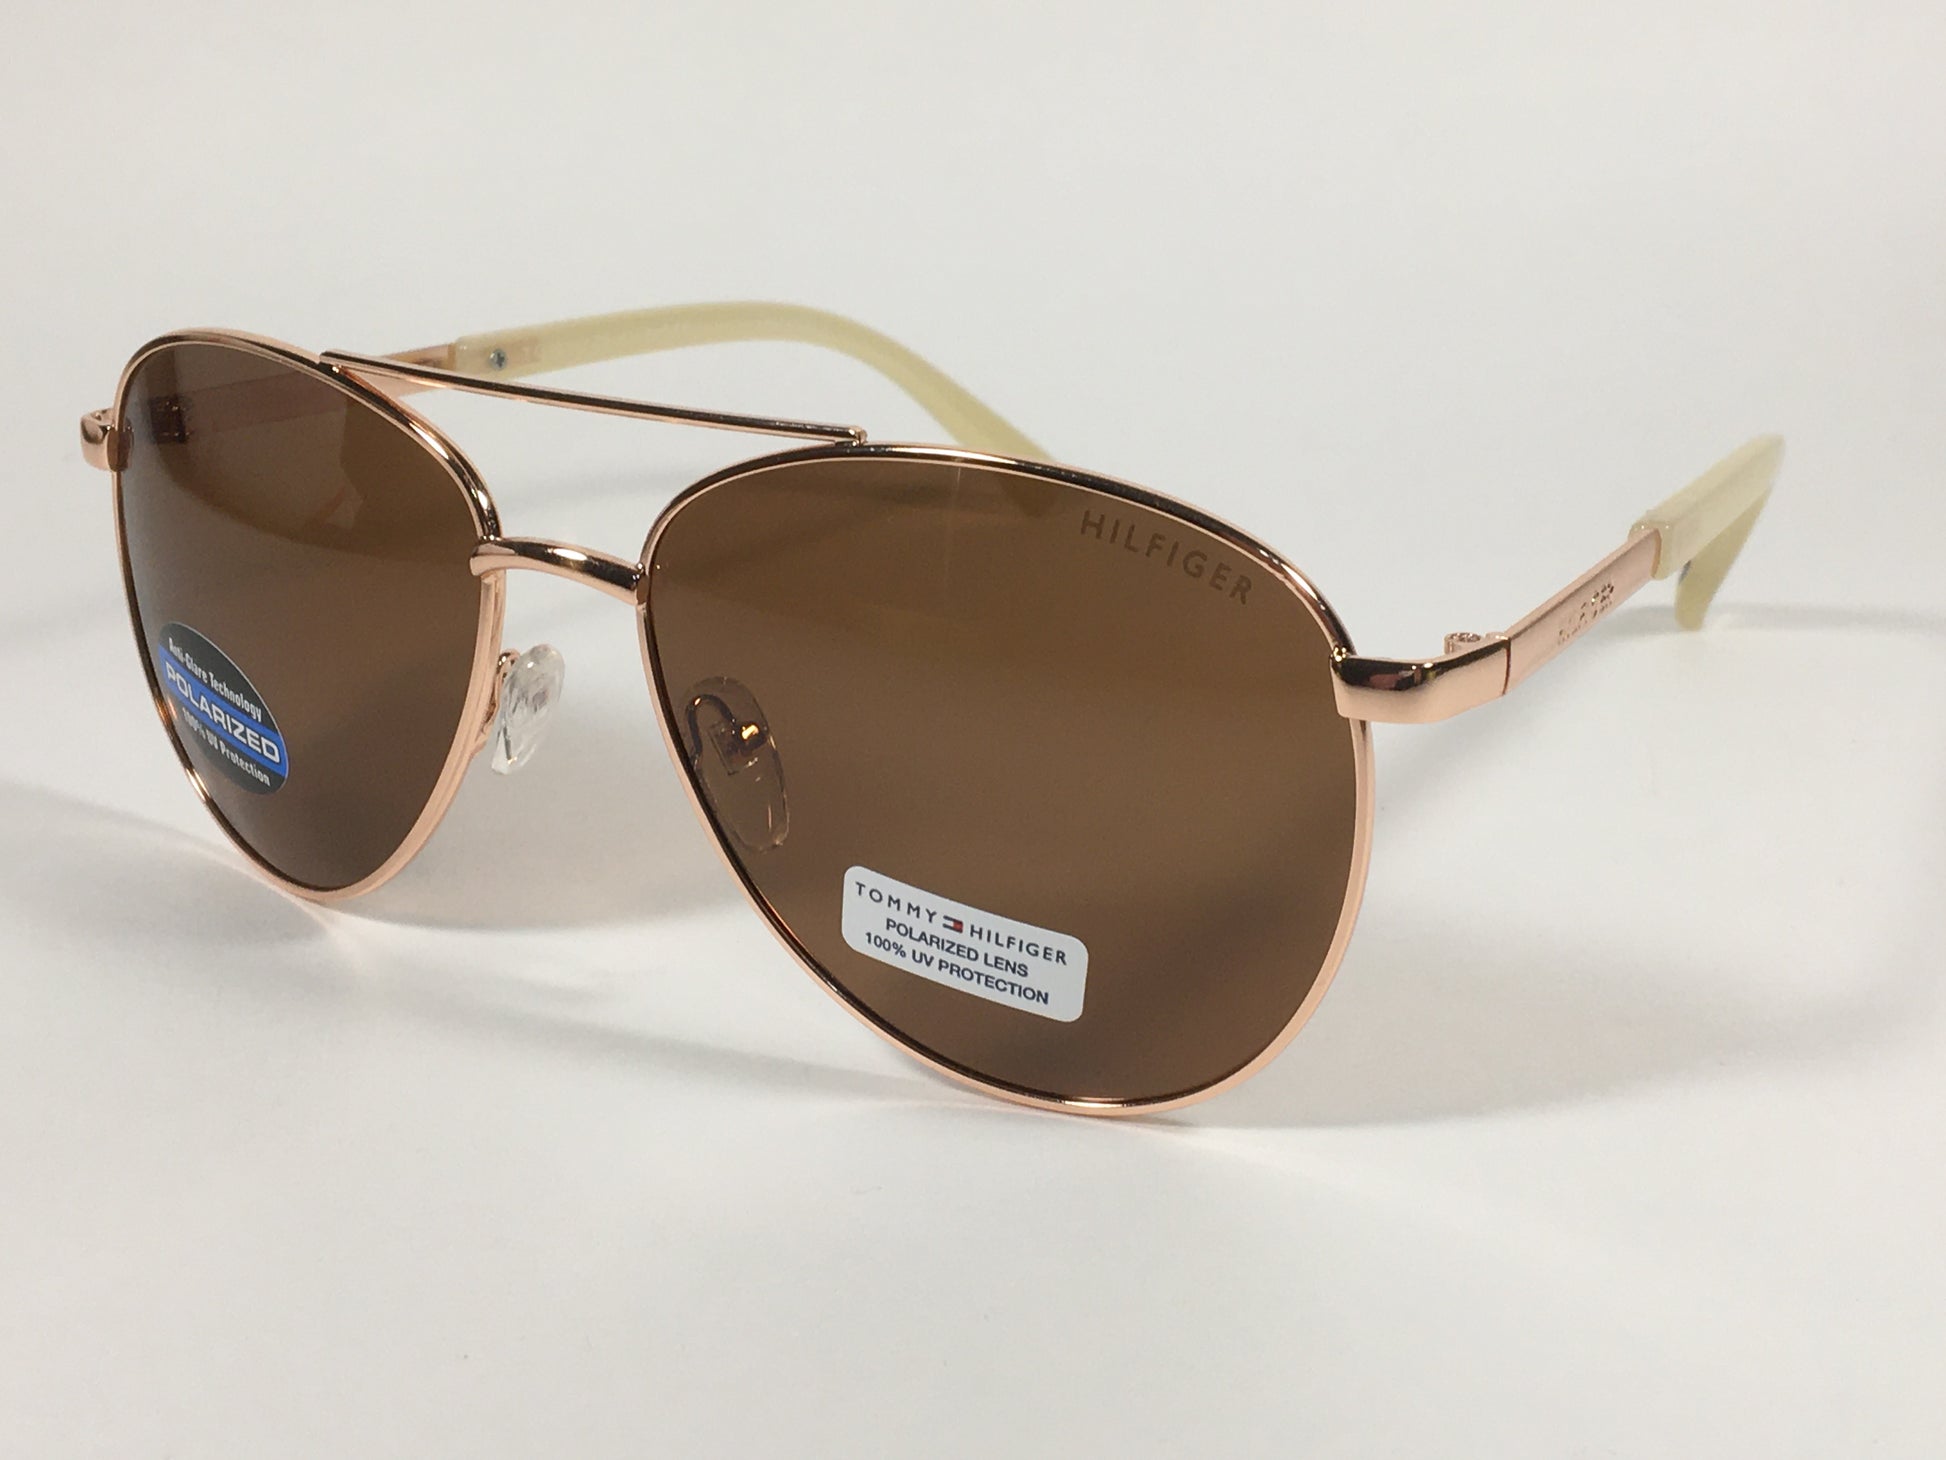 Tommy Hilfiger Lindsay Polarized Aviator Sunglasses Copper Tone Frame Brown Copper Lens LINDSAY WM OL275P - Sunglasses